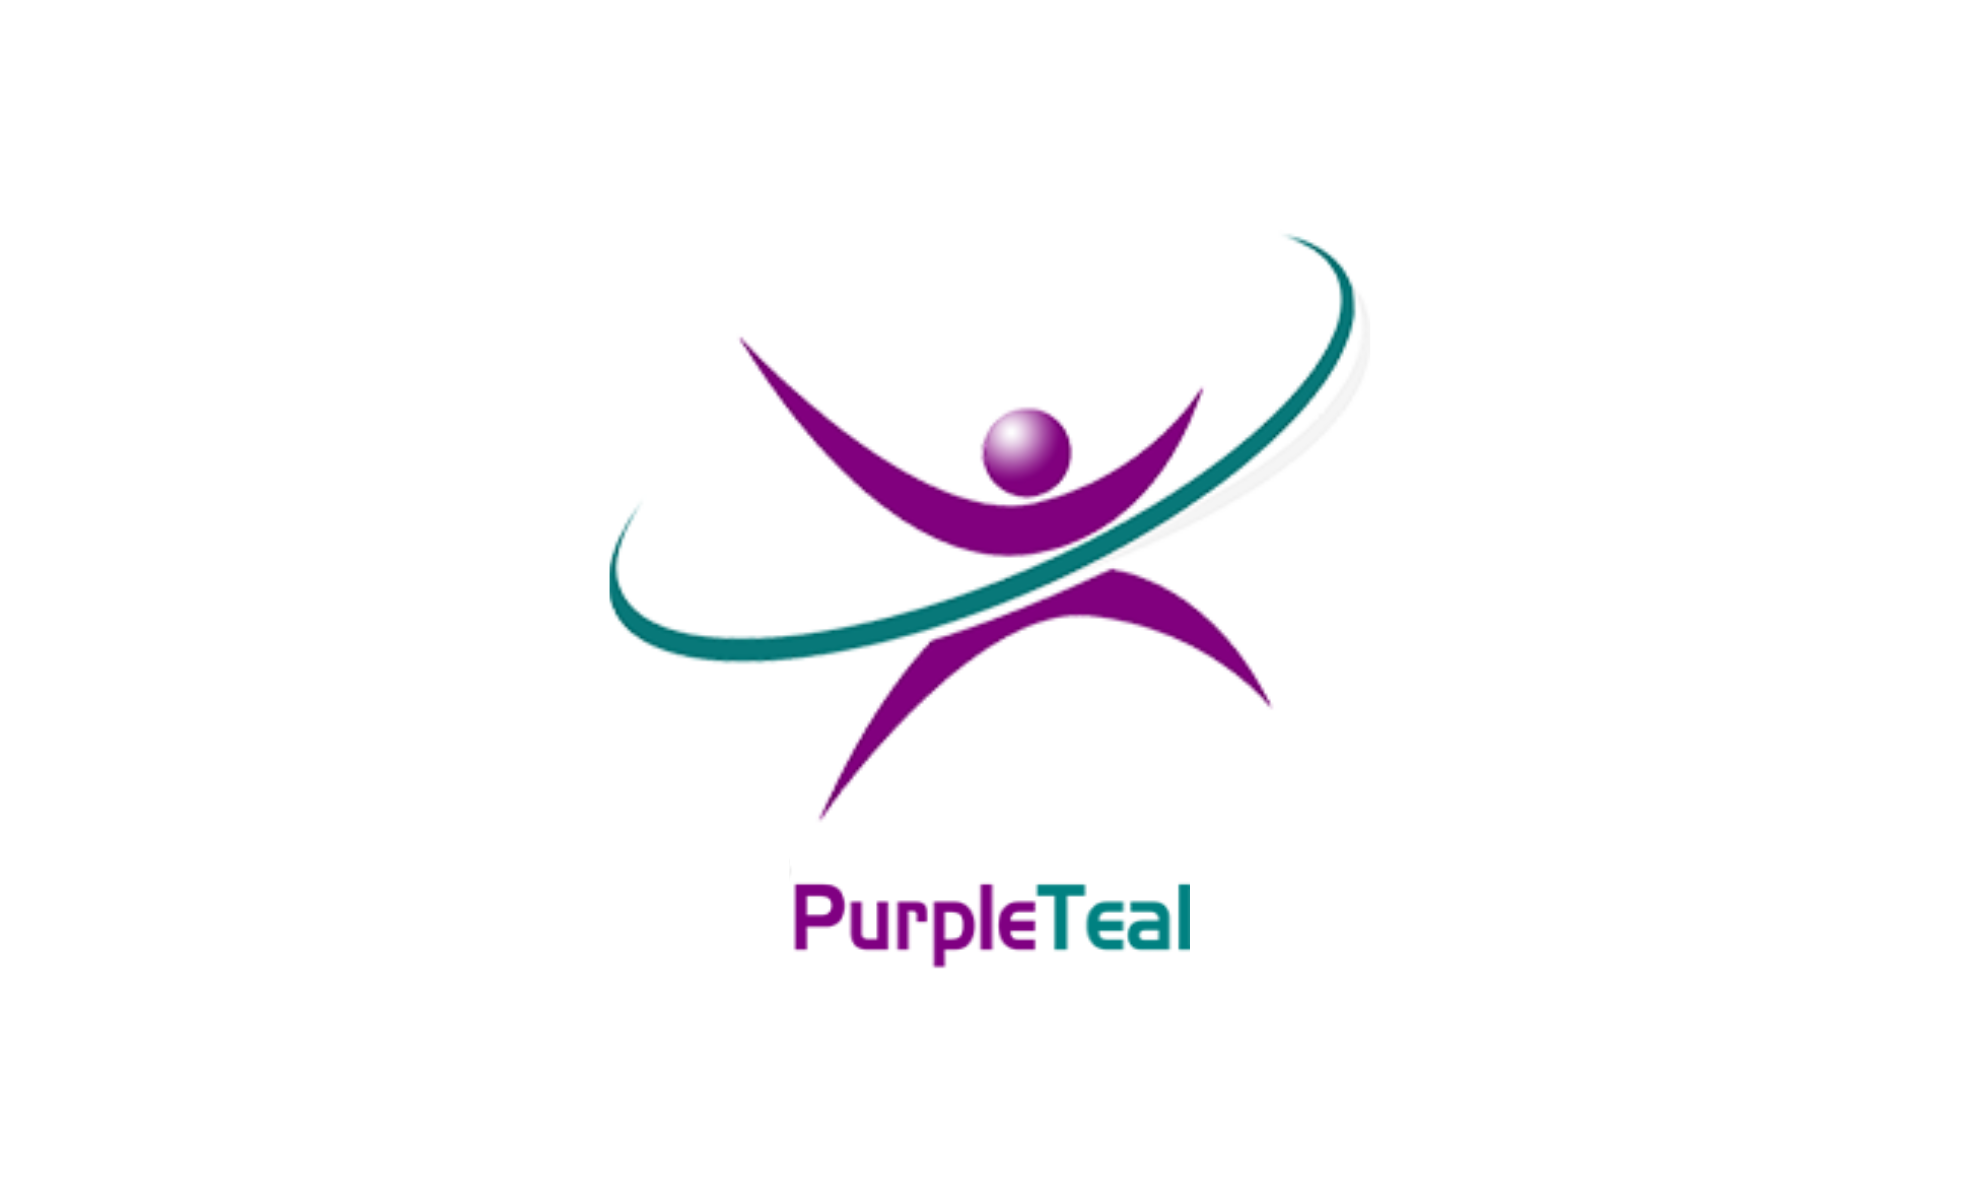 purpleteal